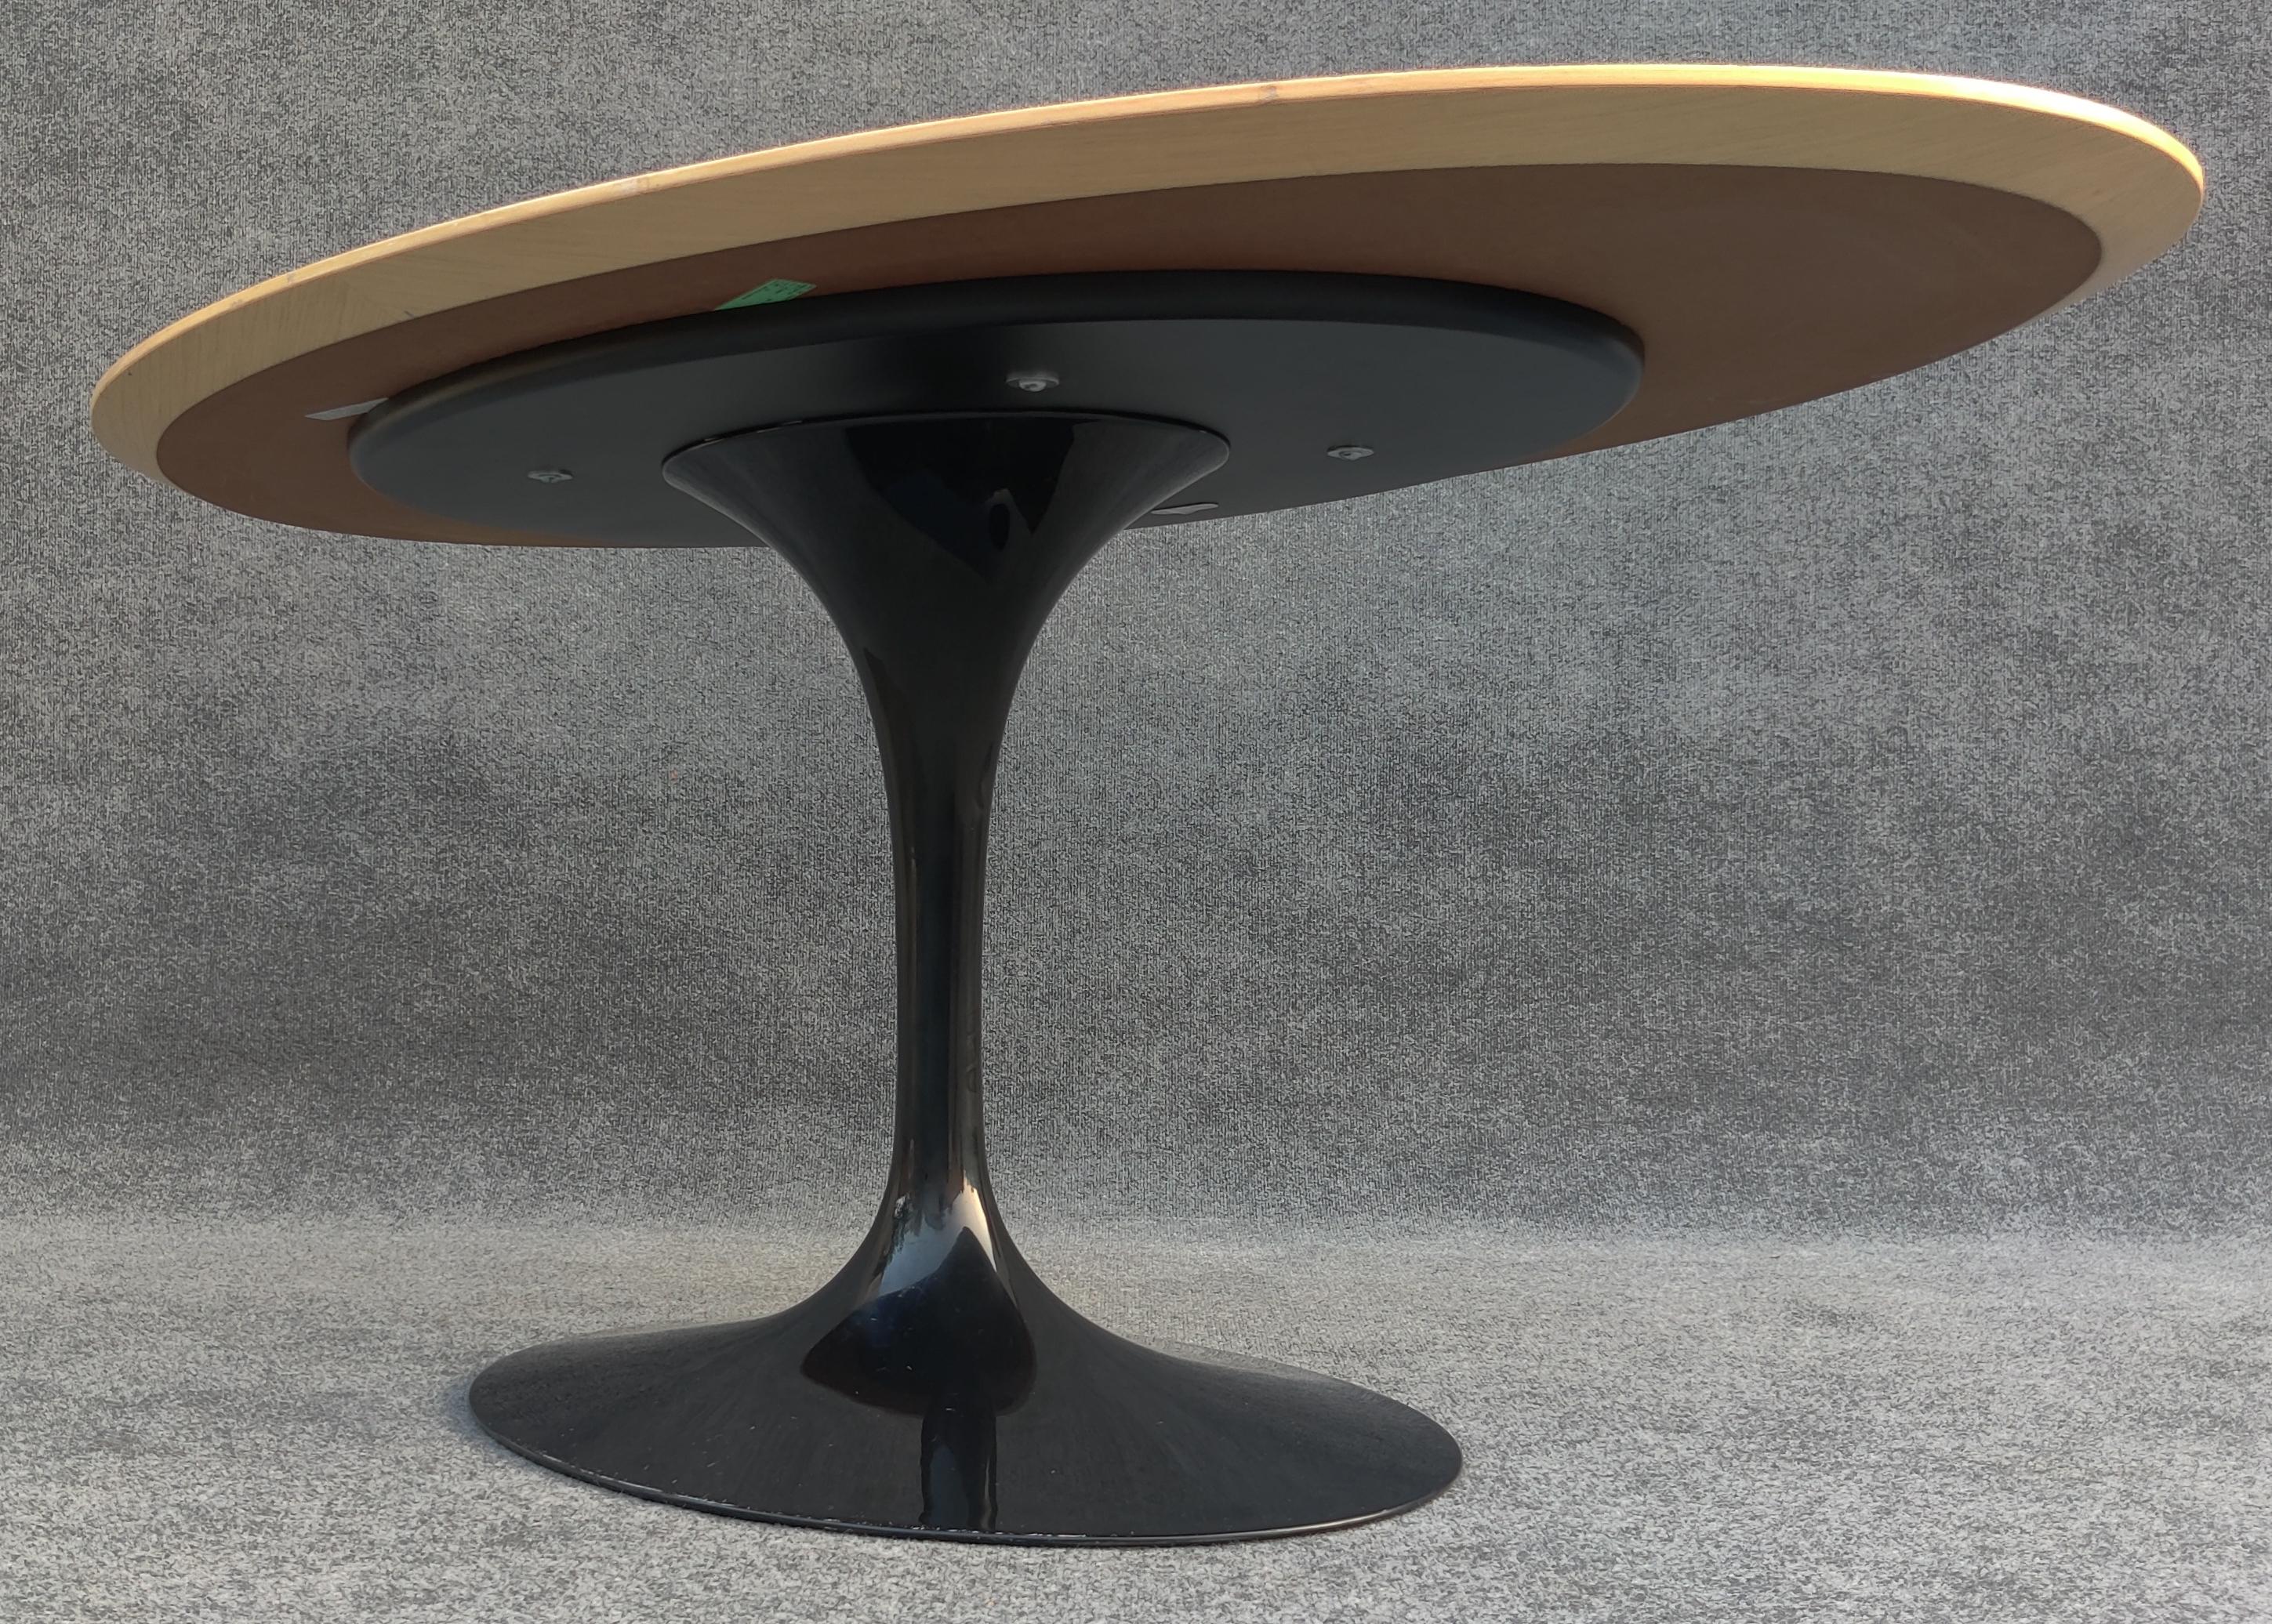 Contemporary Eero Saarinen Knoll Oval Tulip Dining Table 66x38